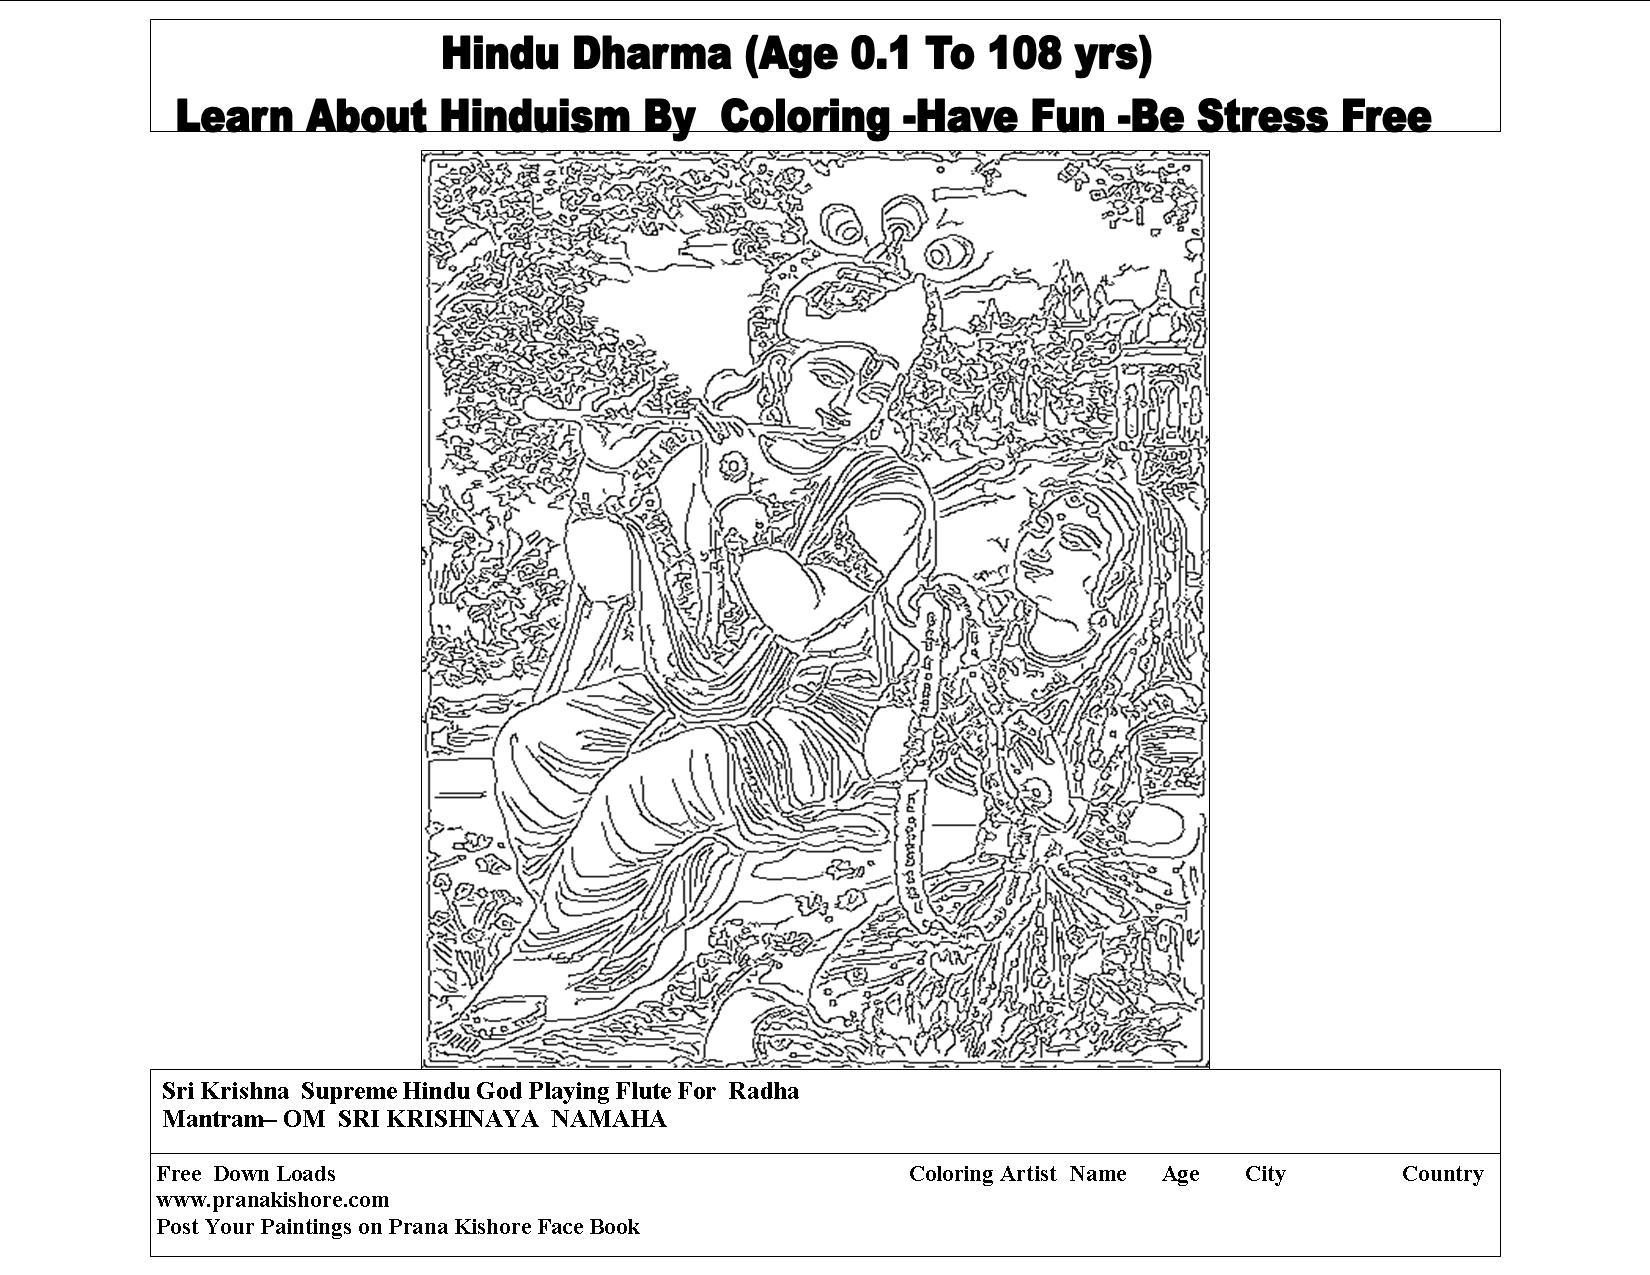 Hindu Dharma Coloring- Sri Krishna Playing Flute for Radha